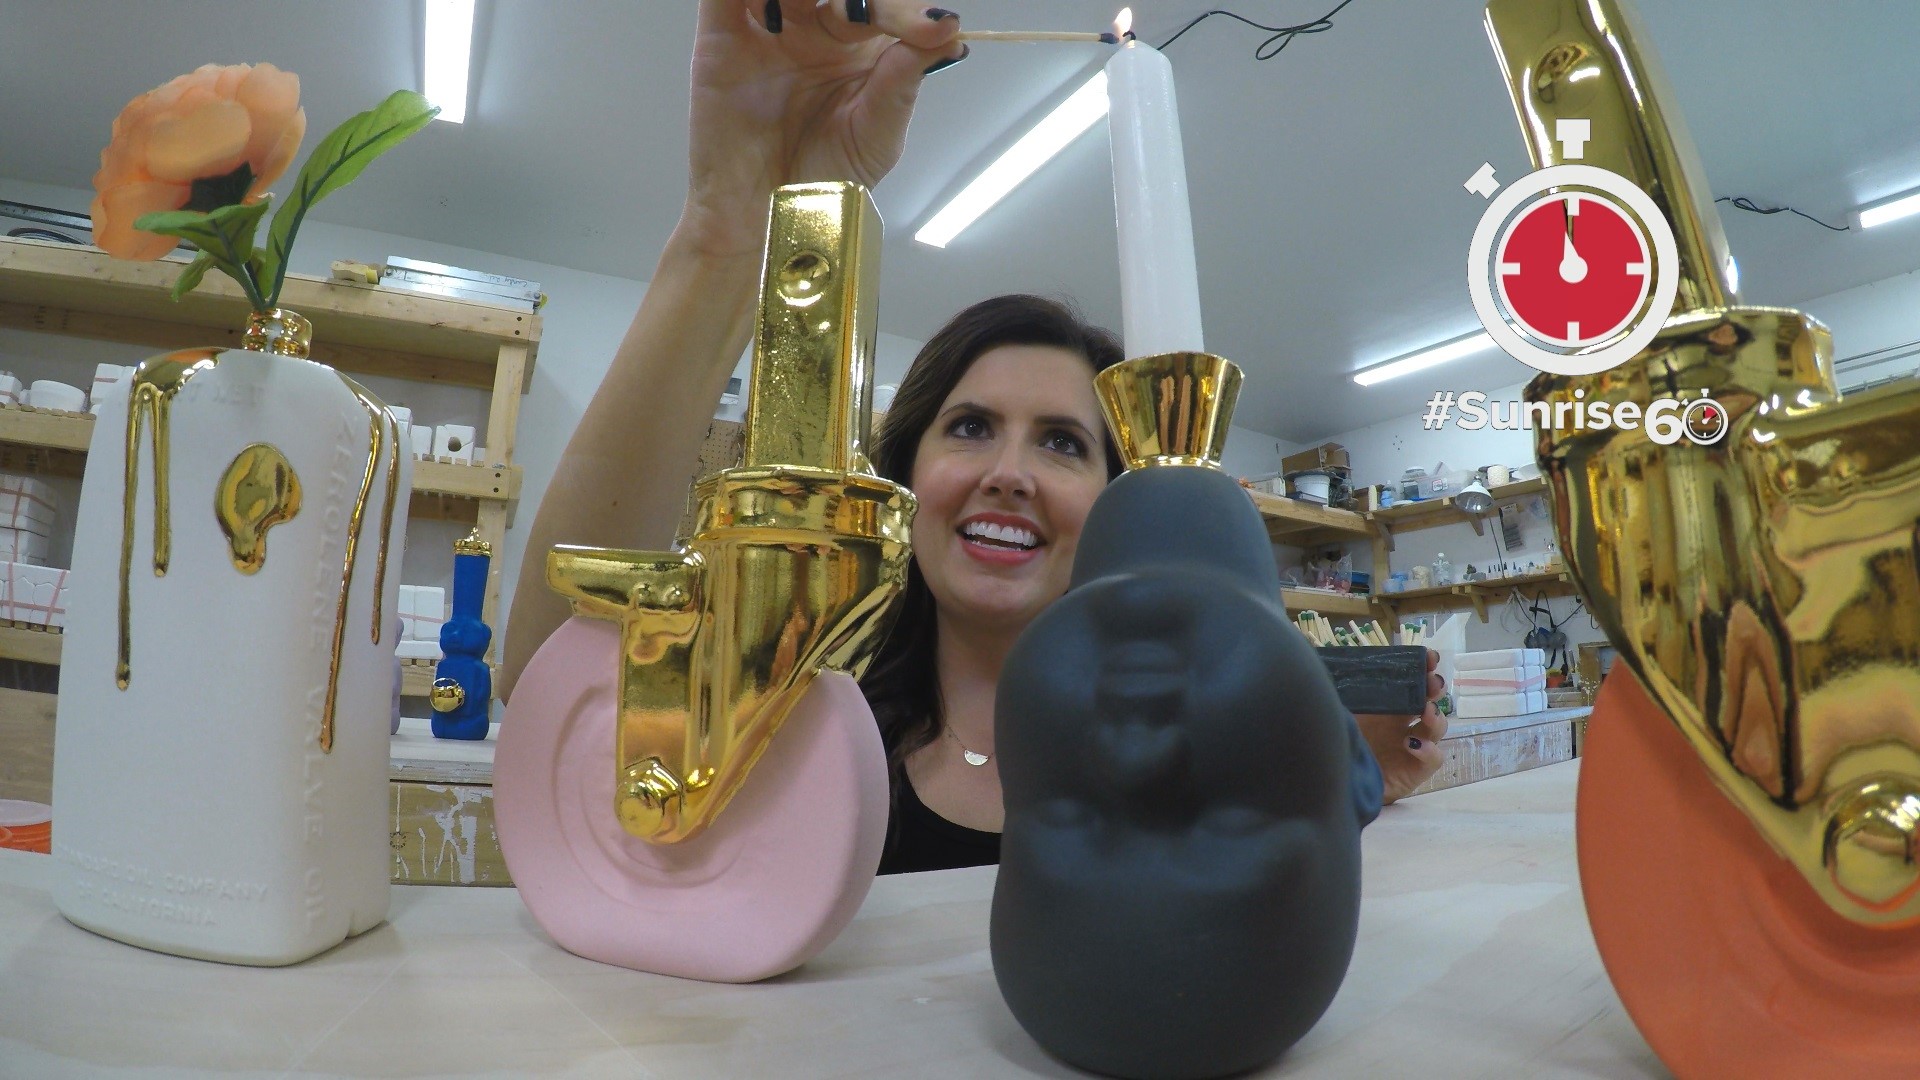 Nina Mehlhaf visits a local ceramics studio that specializes in unique home decor.